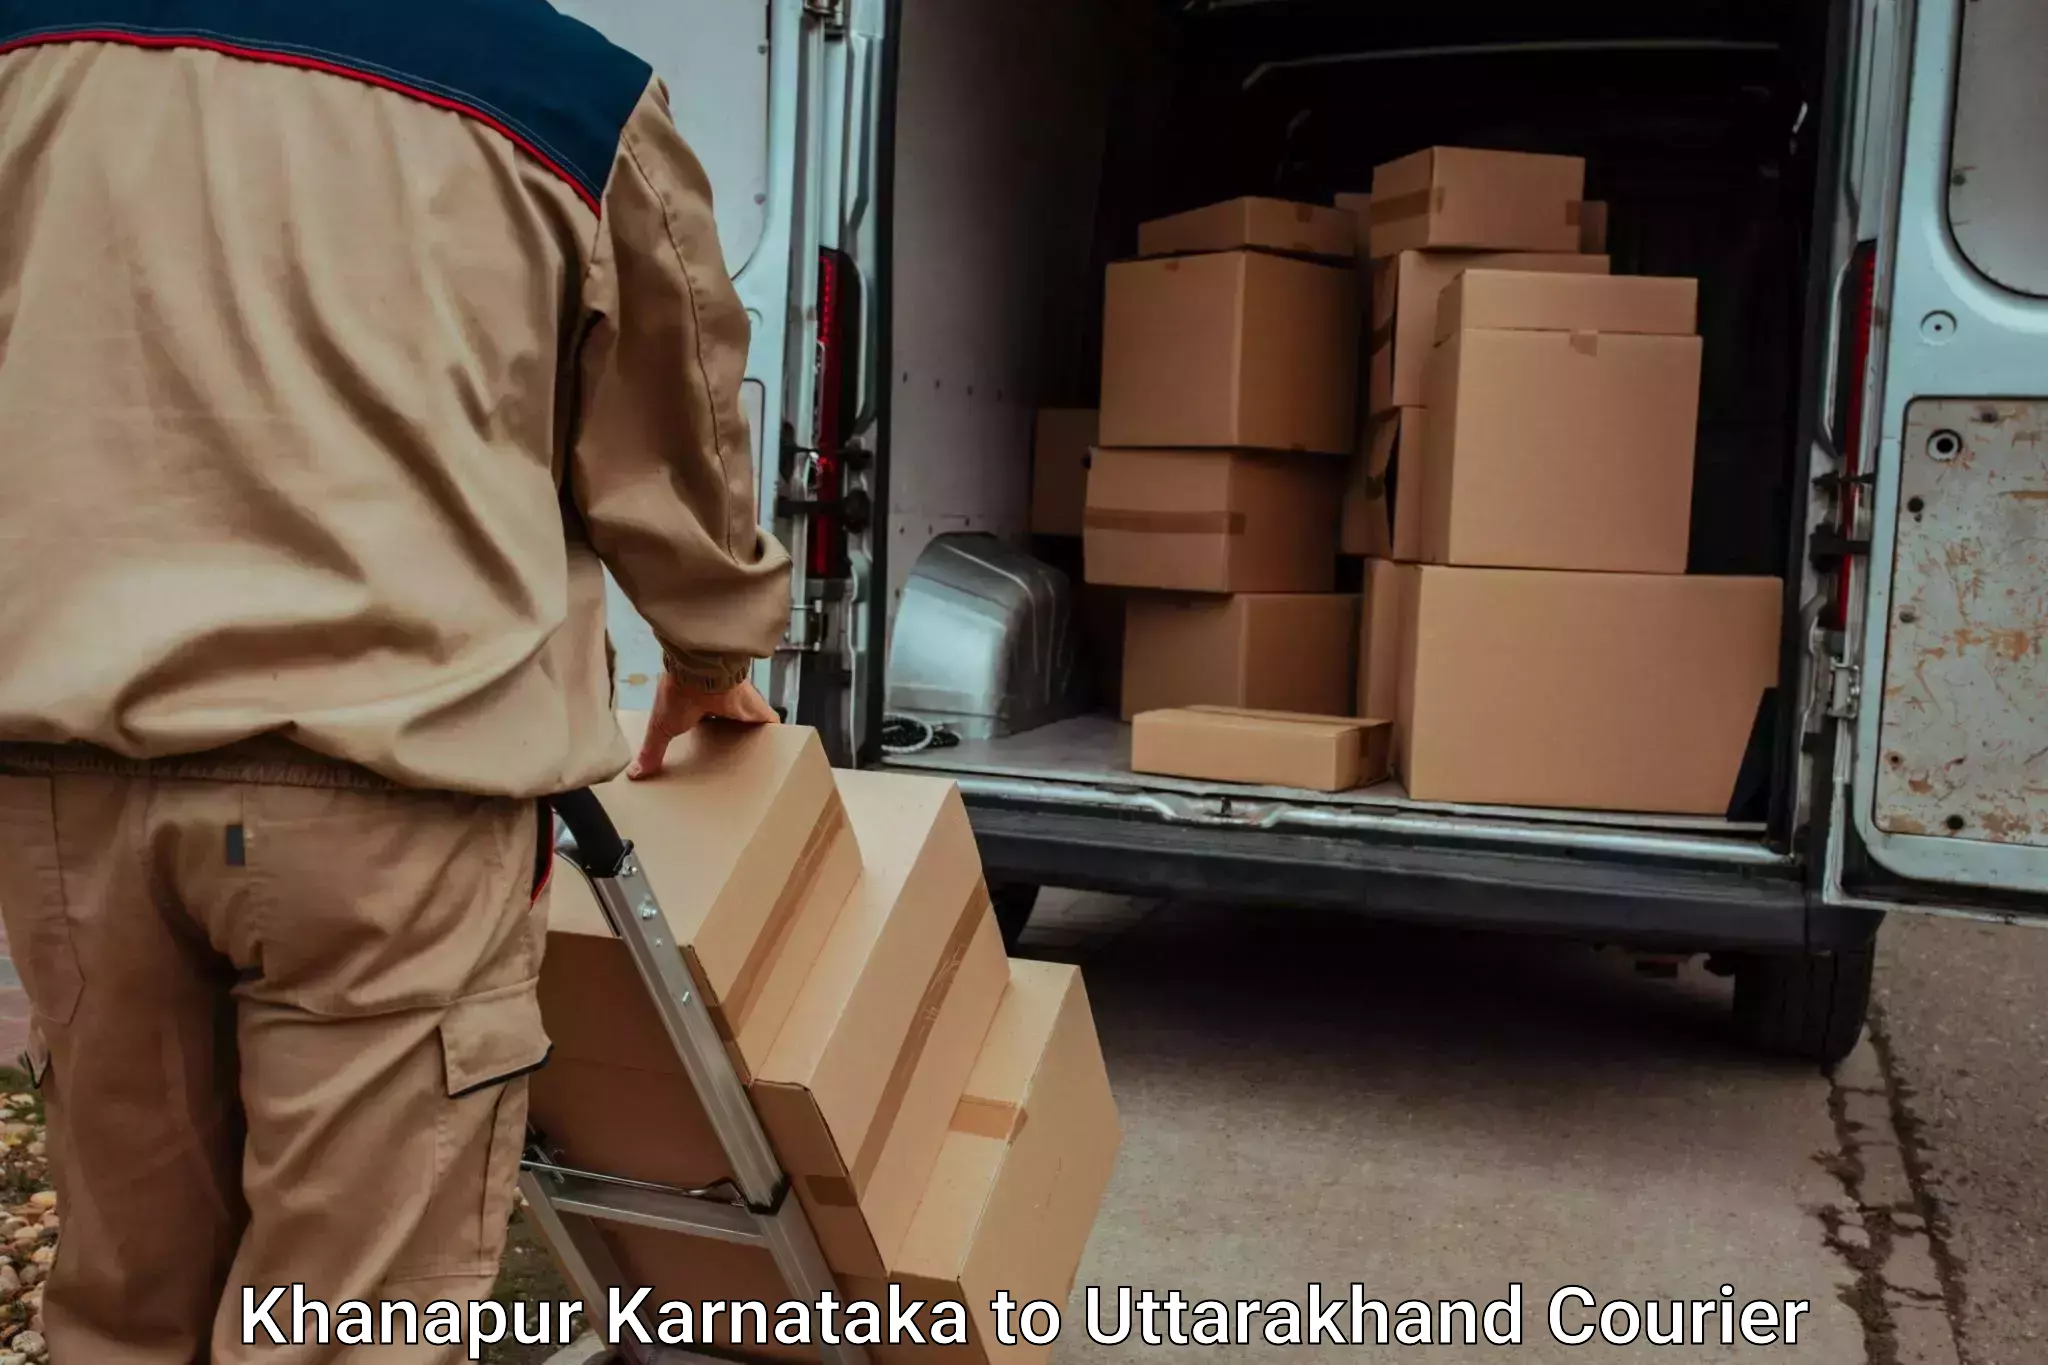 Urgent luggage shipment Khanapur Karnataka to Tehri Garhwal